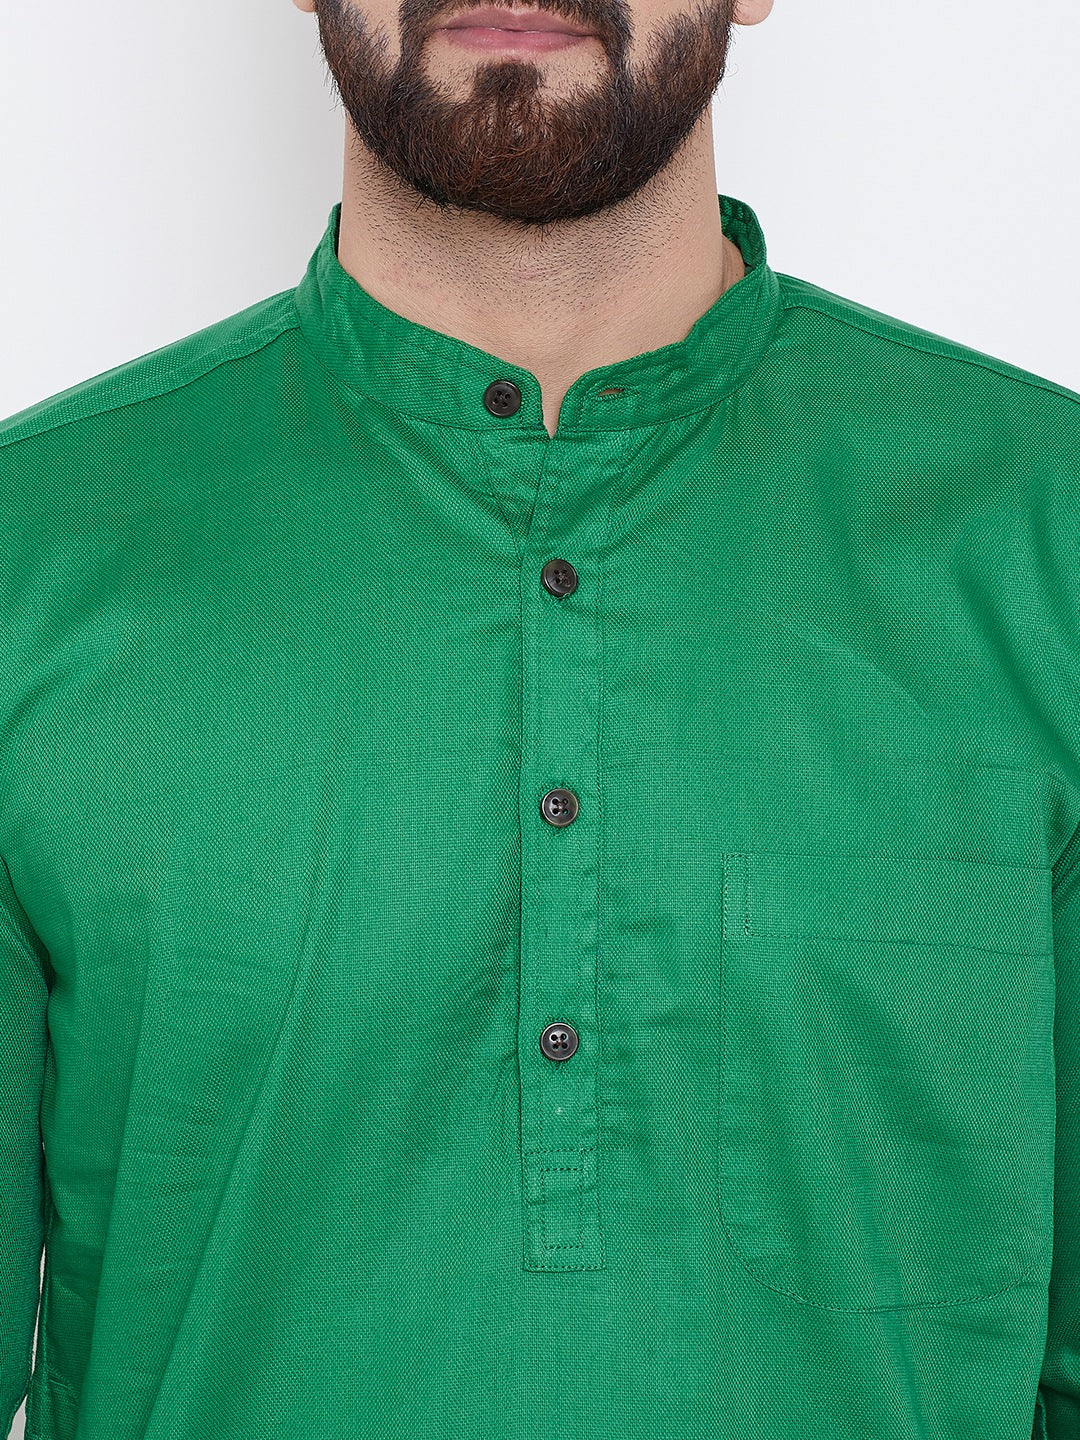 Men's Leaf Green Cotton Kurta - Even Apparels